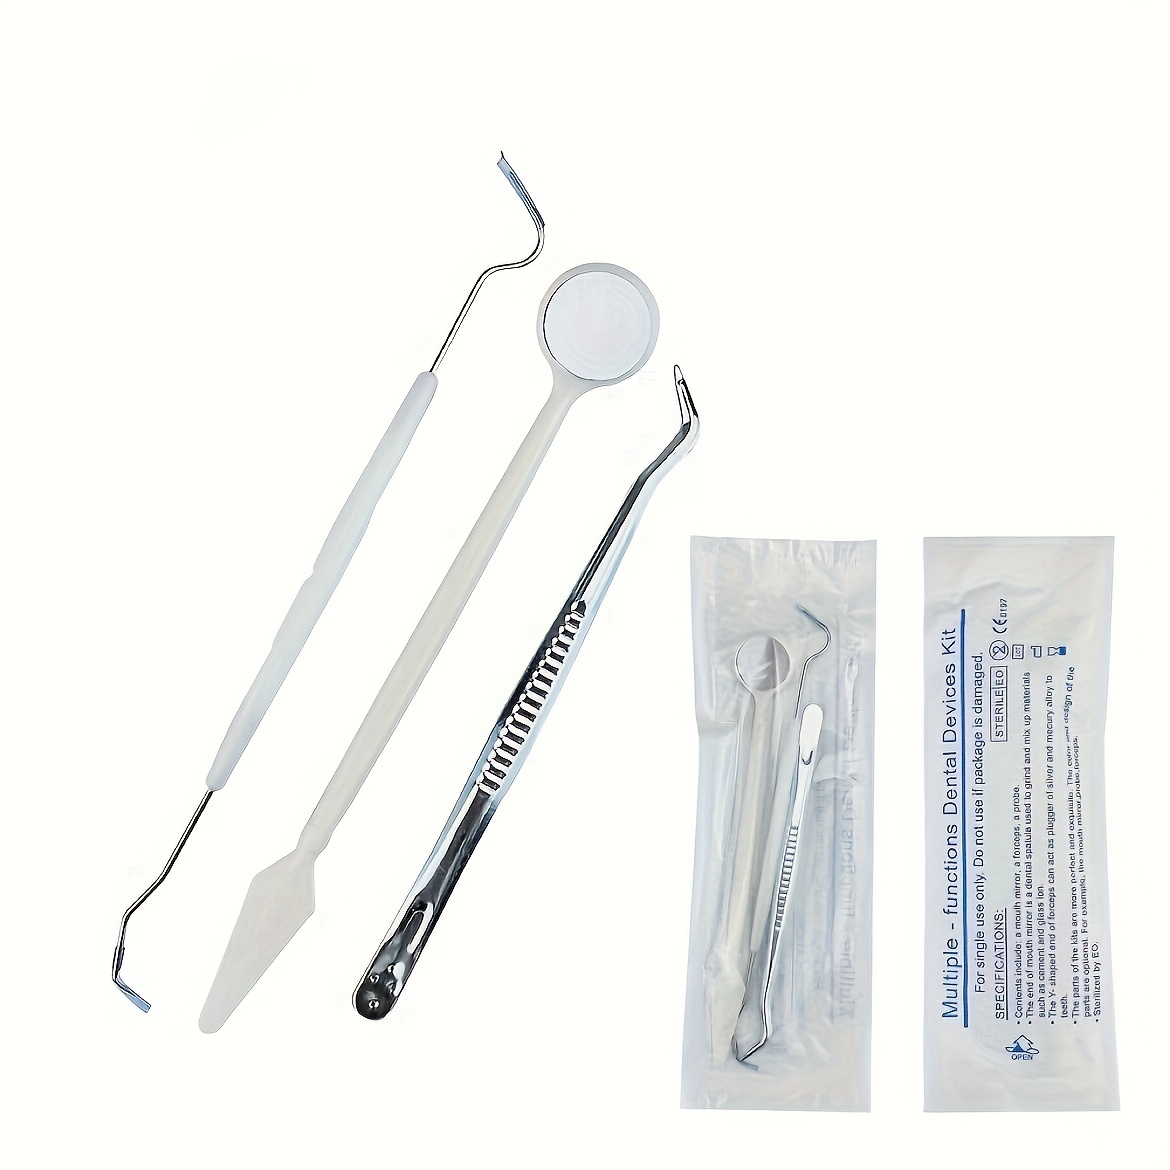 Professional Dental Oral Kit - Scaler Probe Pick SET Mirror STEEL- Dentist  Tools